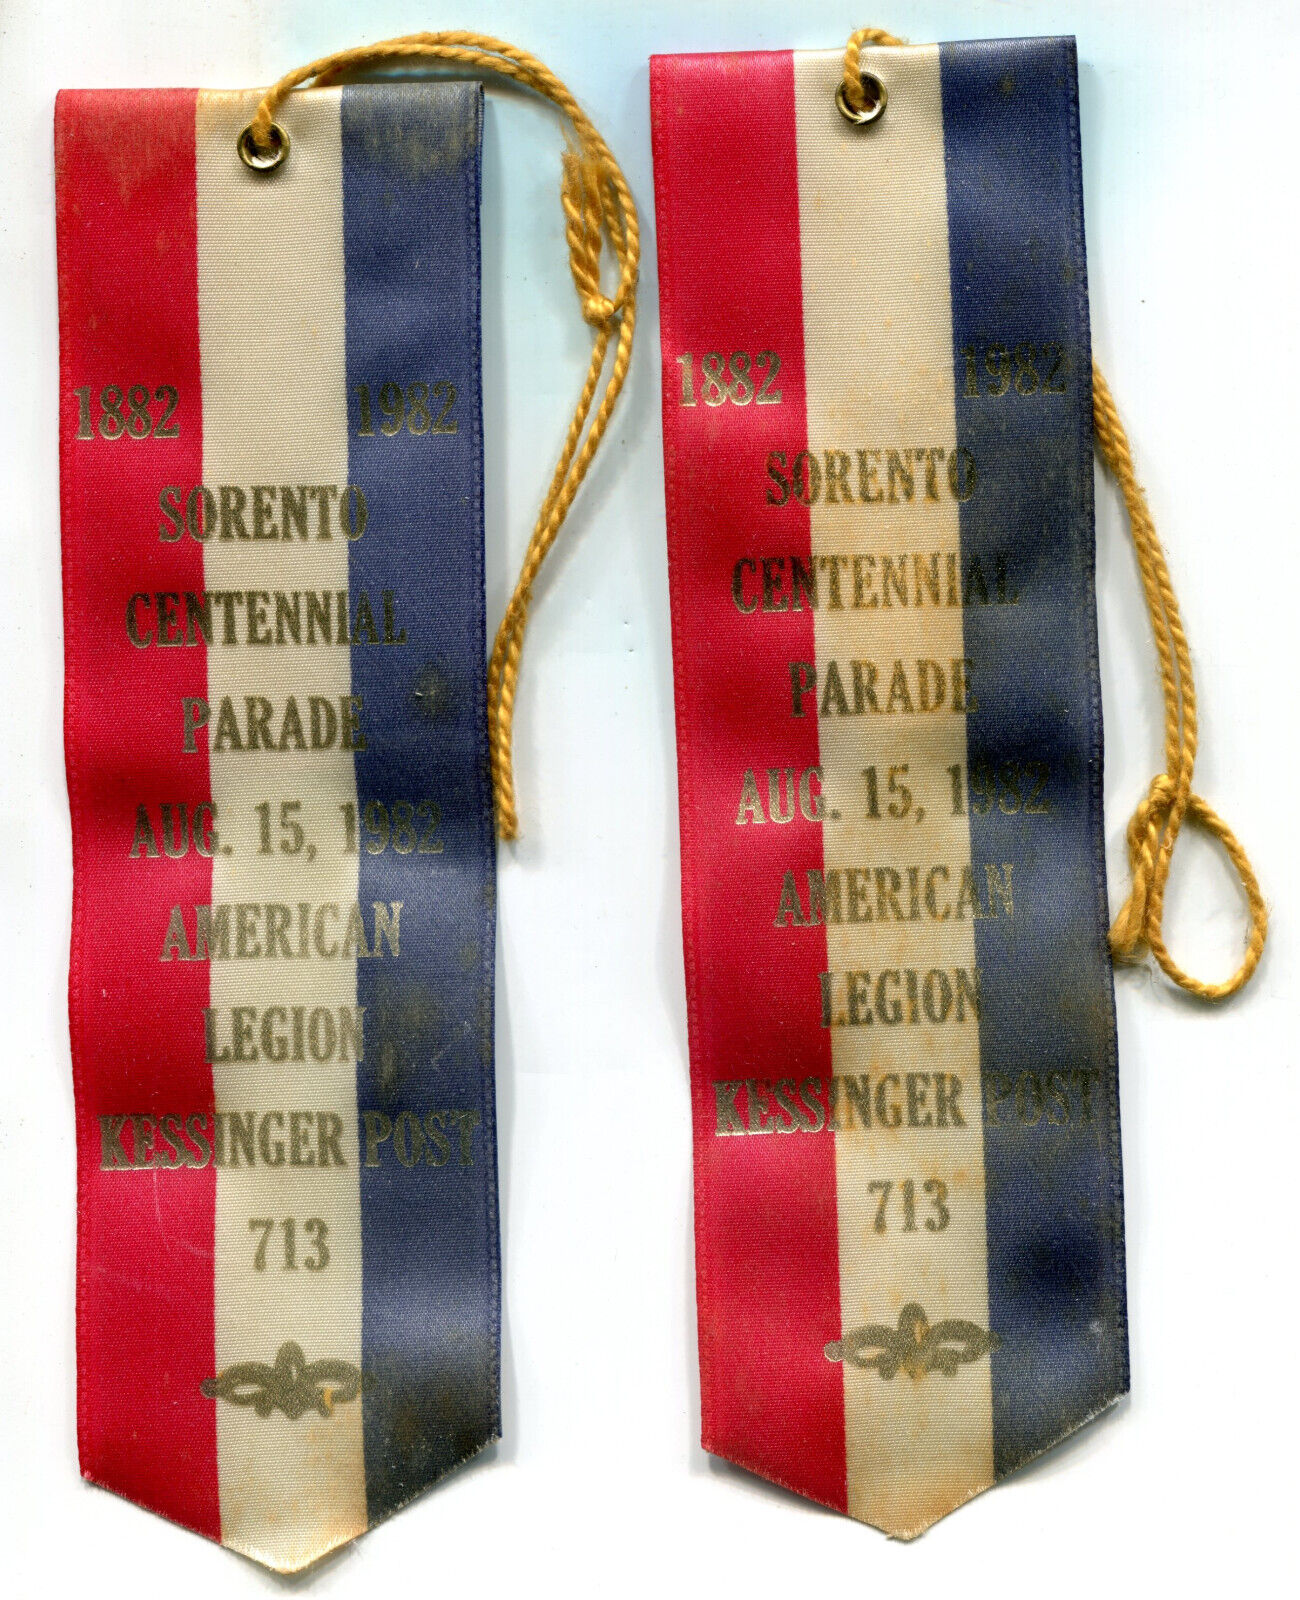 1882 1982 Sorento Illinois Centennial Parade, 2 Ribbon, American Legion Post 713